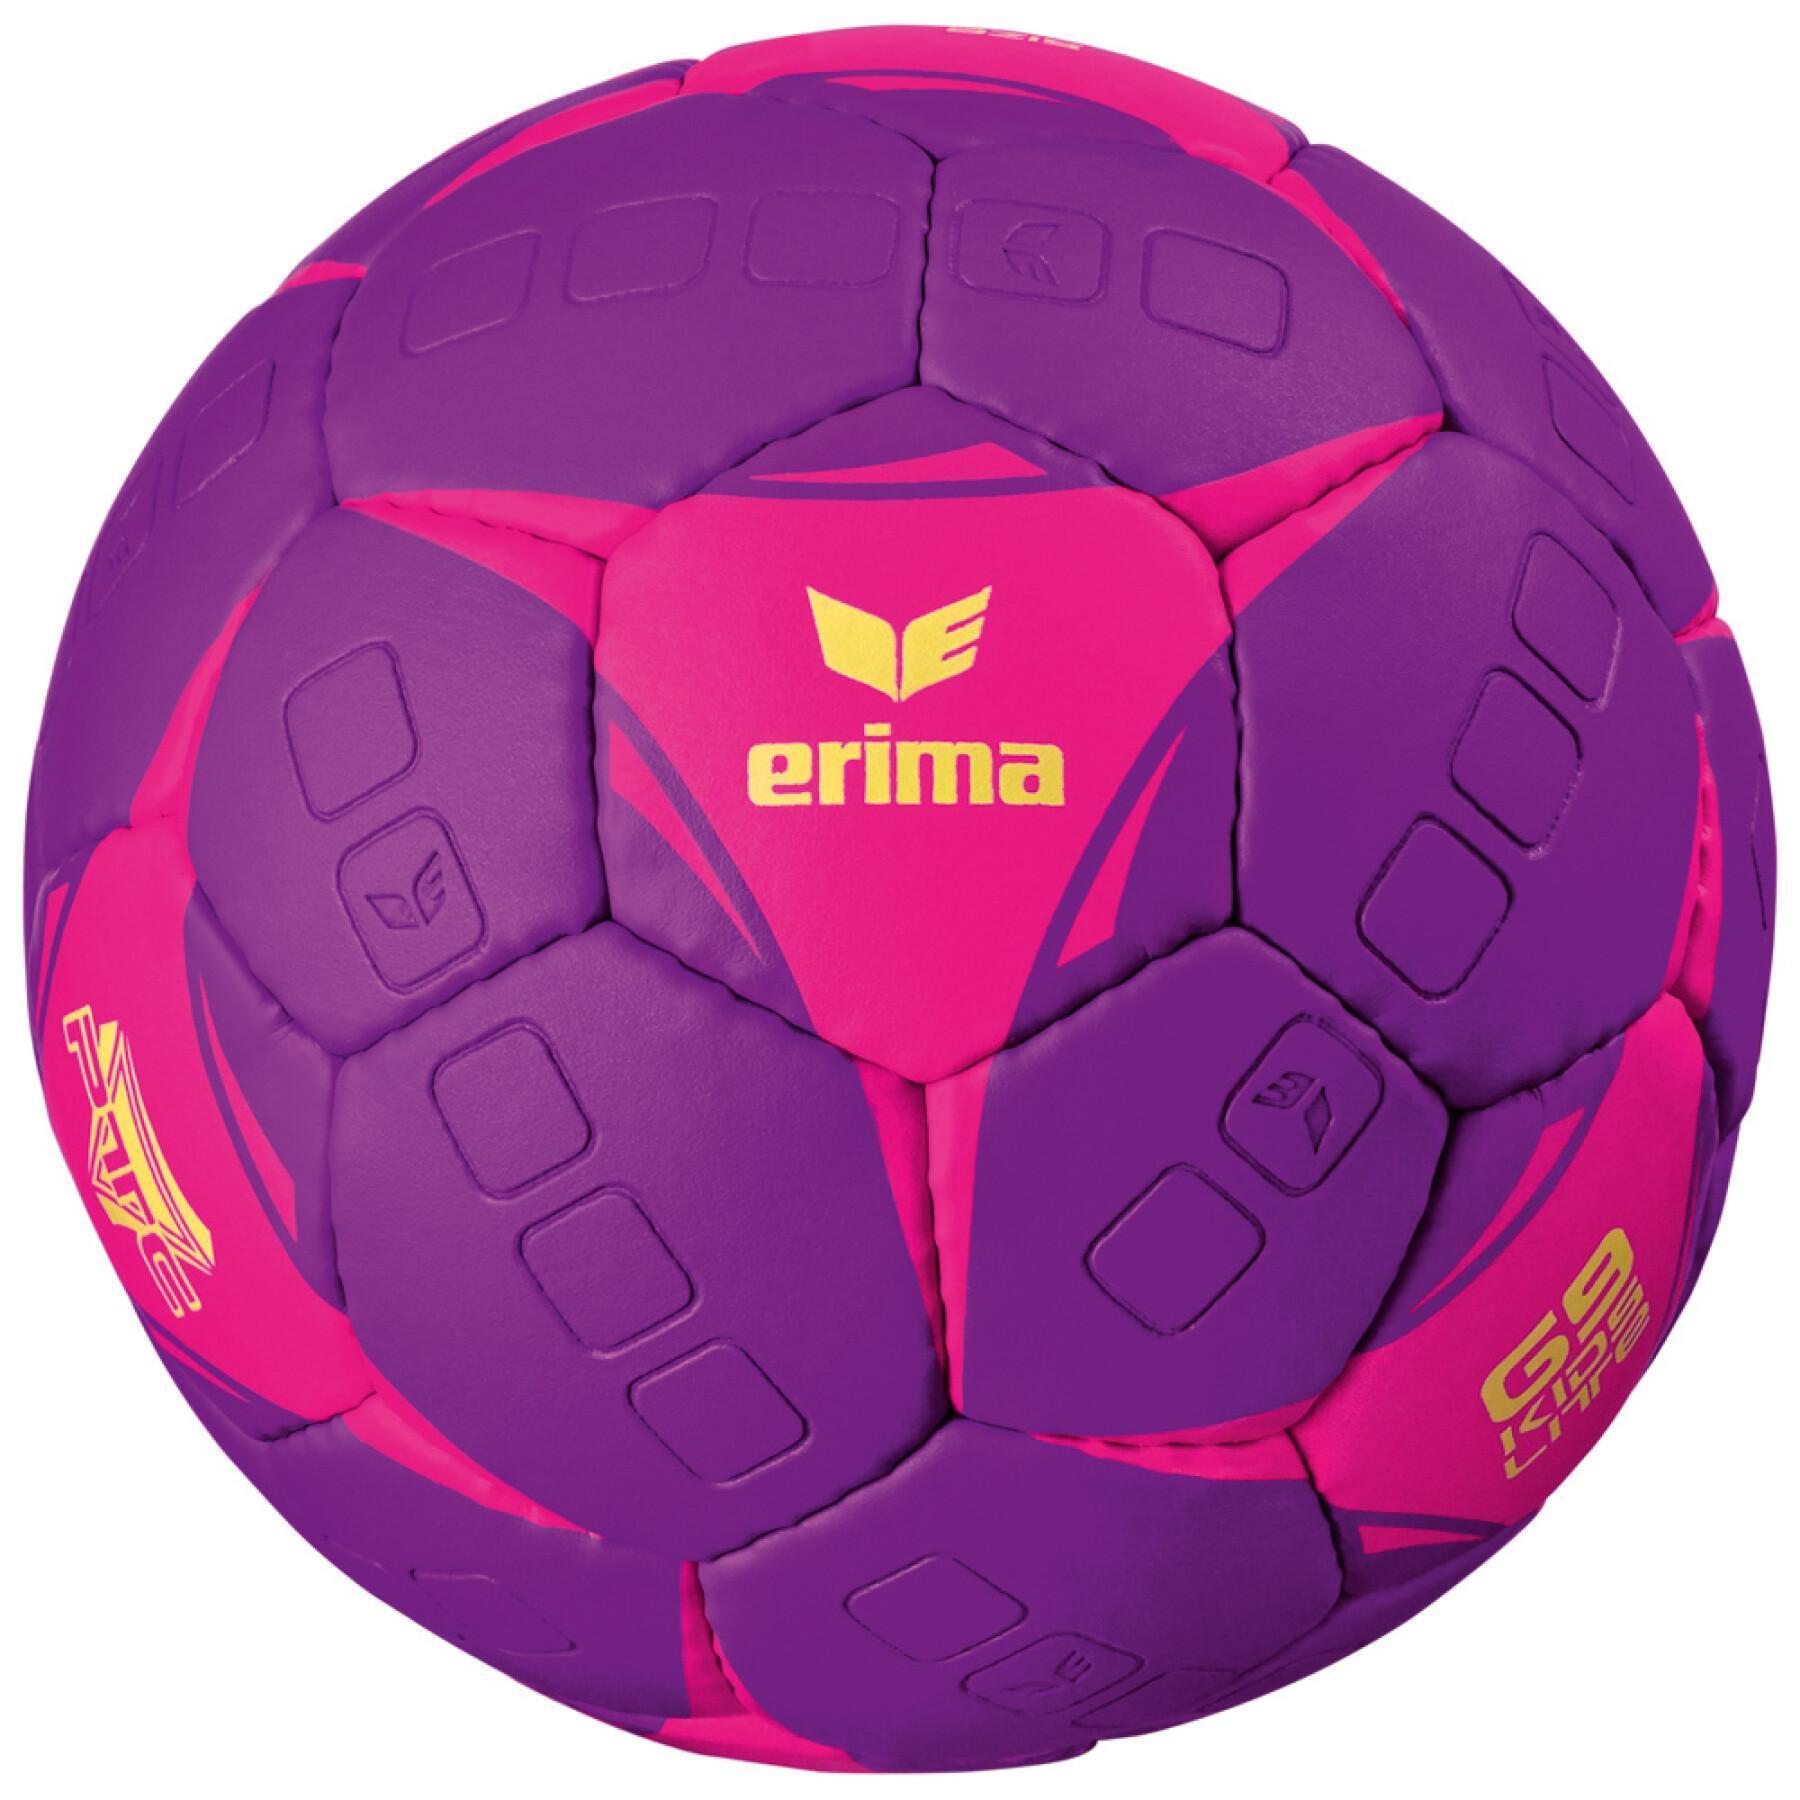 Handball Erima G9 Kids Lite violet/rose taille 0